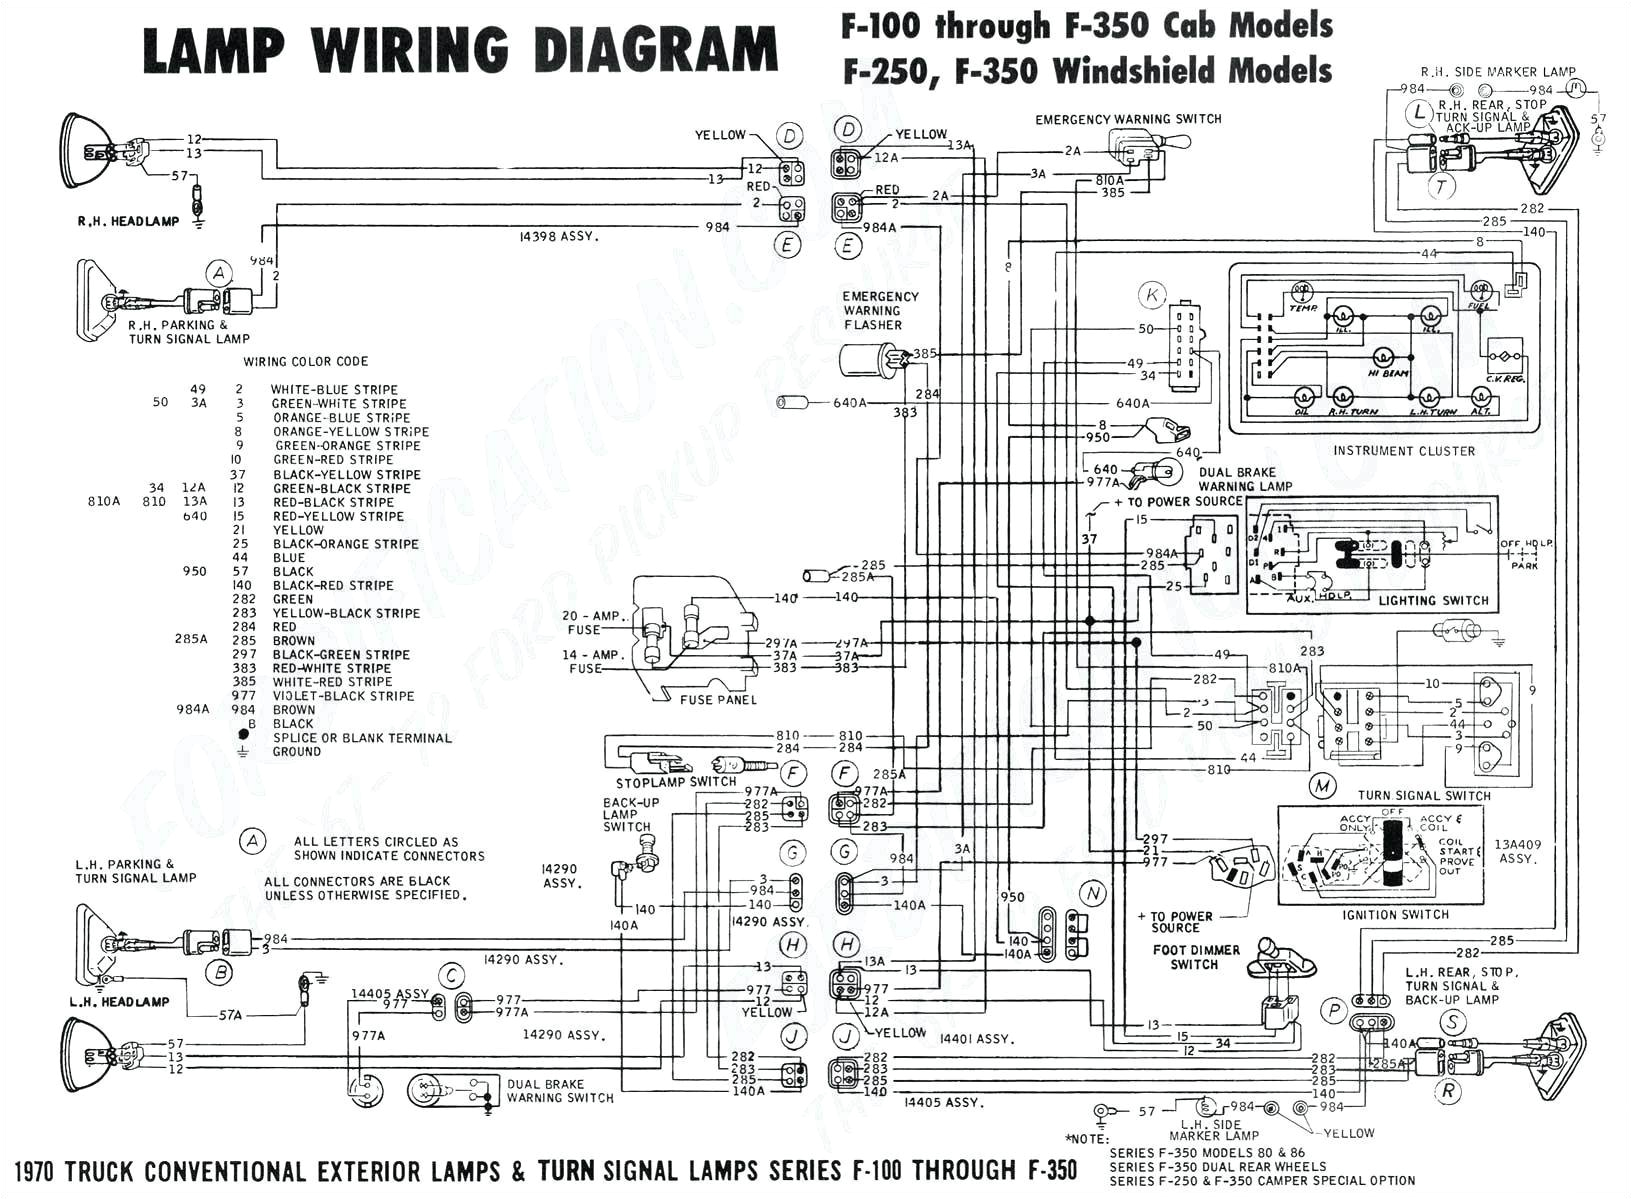 2003 trailblazer tail light circuit diagram new 2006 chevy silverado tail light wiring diagram wiring diagram of 2003 trailblazer tail light circuit diagram jpg